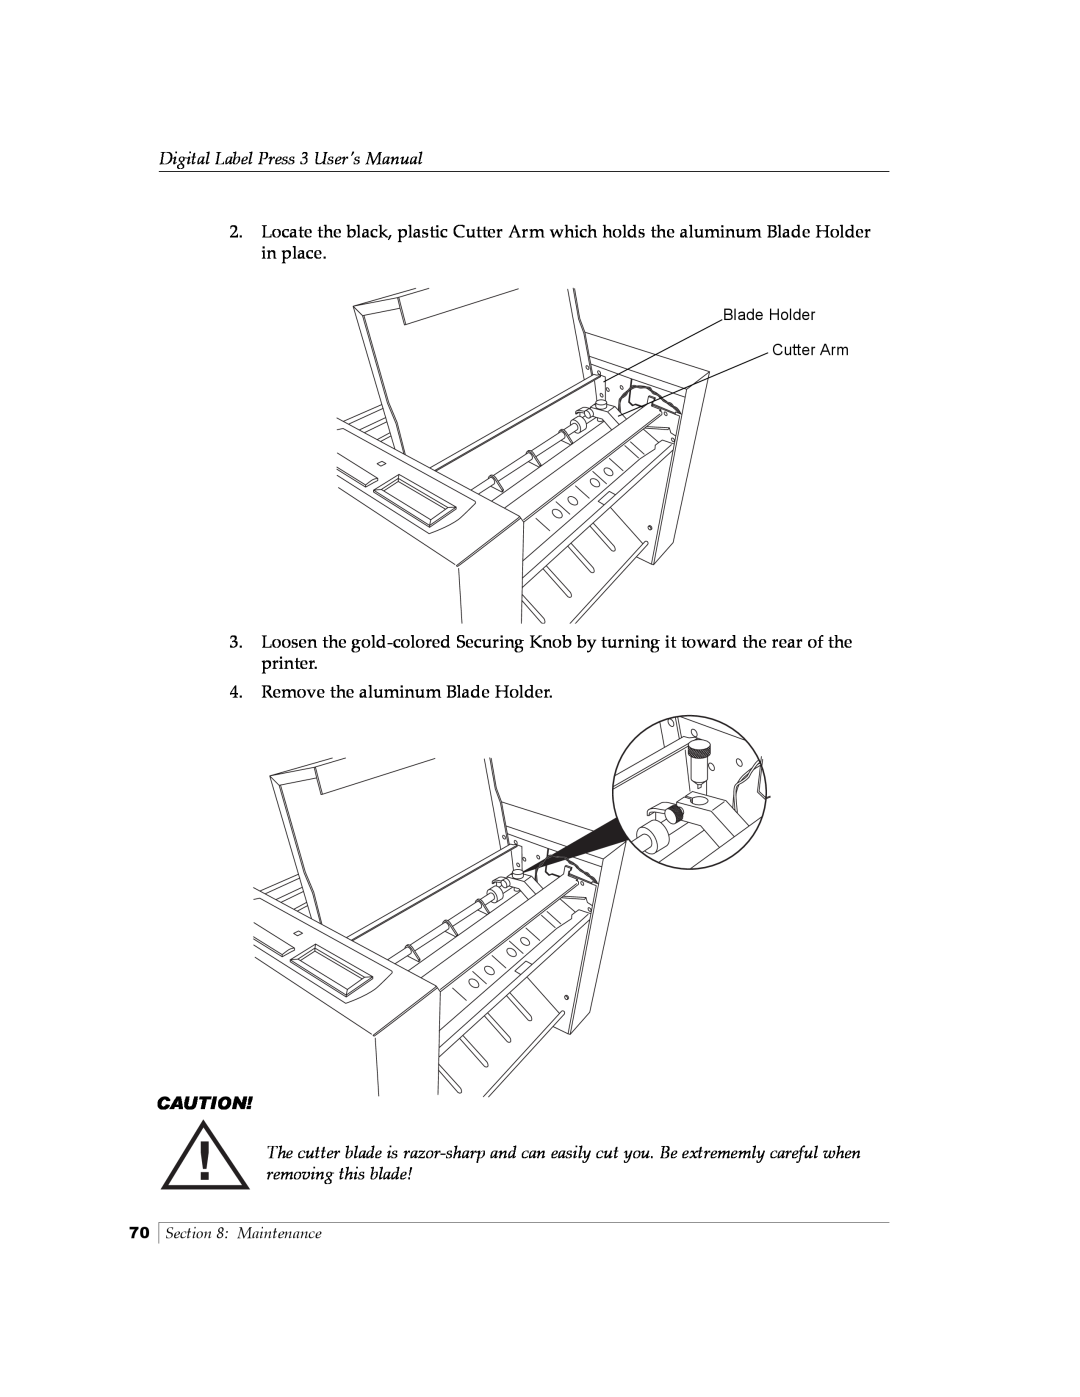 Primera Technology 510212 manual Digital Label Press 3 User’s Manual, Remove the aluminum Blade Holder 